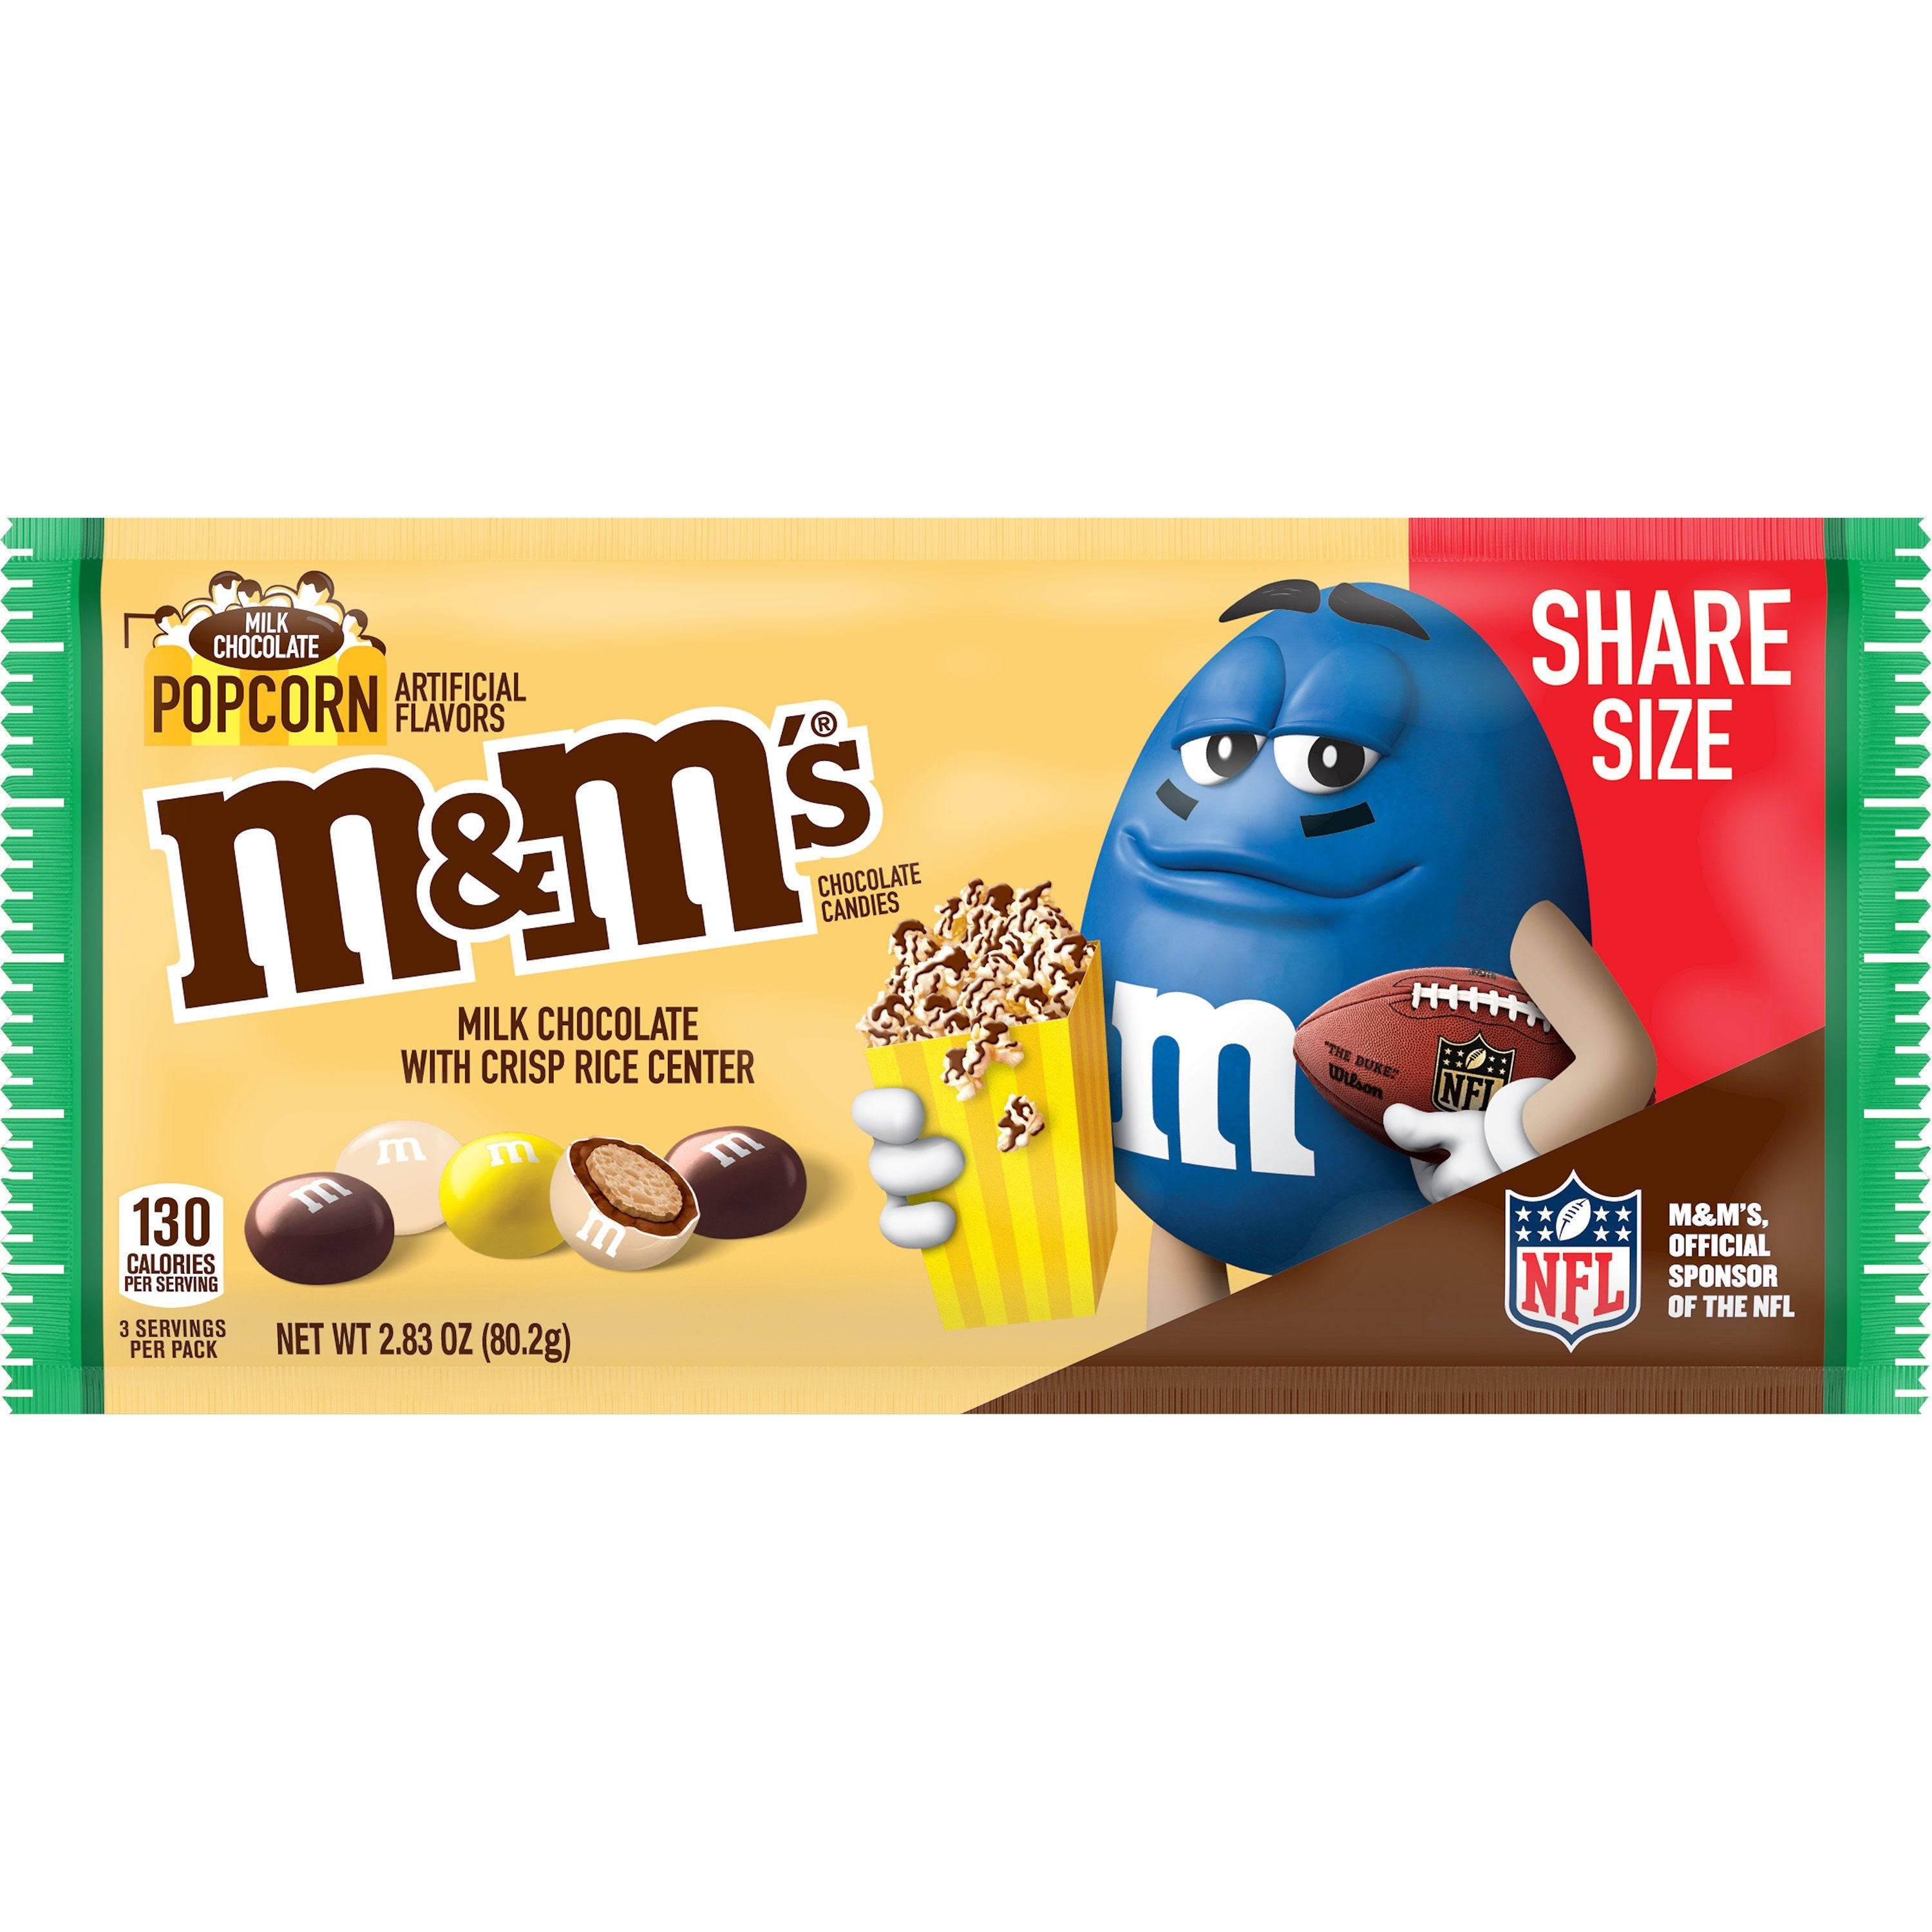 M&M's Chocolate Candies, Chocolate Popcorn, Share Size - 2.83 oz